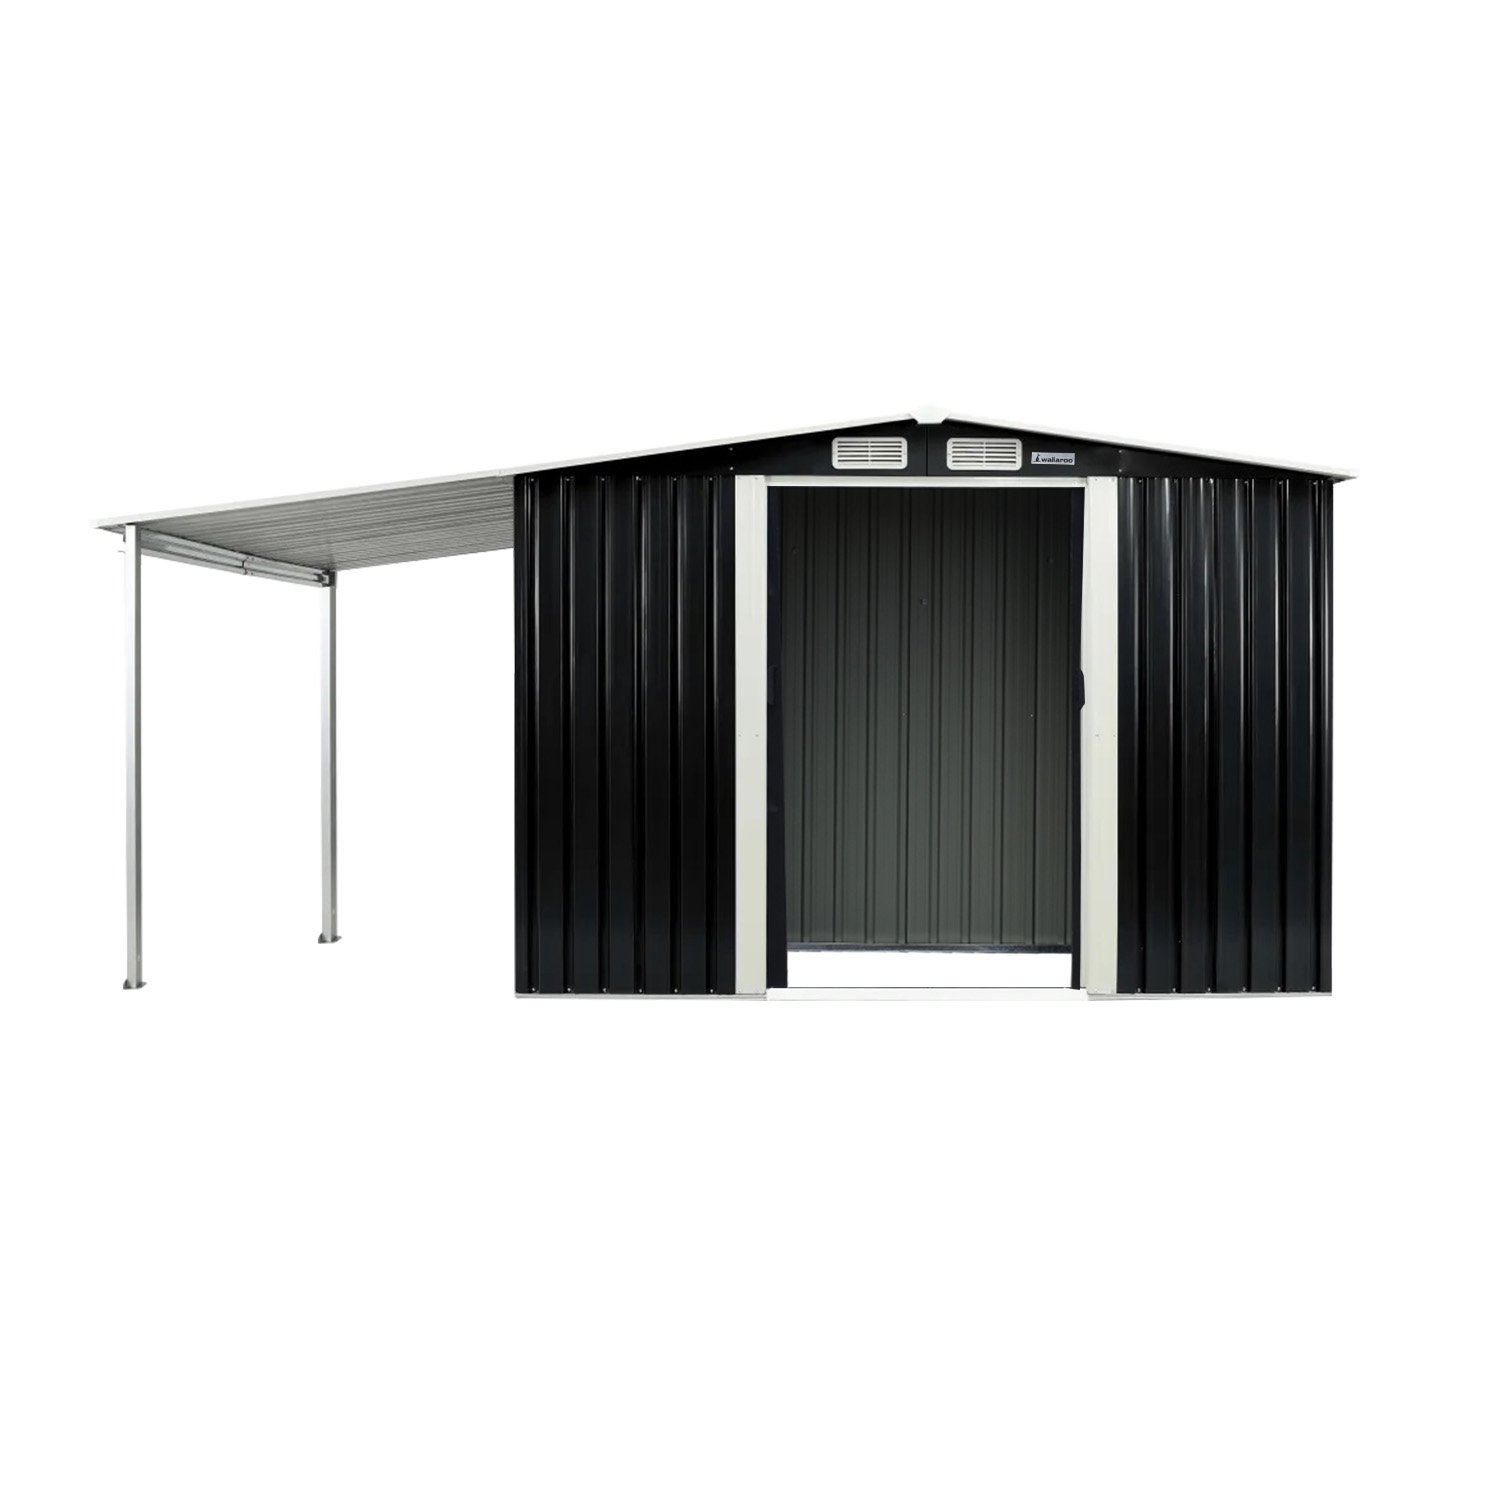 Wallaroo 8x8ft Zinc Steel Garden Shed with Open Storage - Black 2